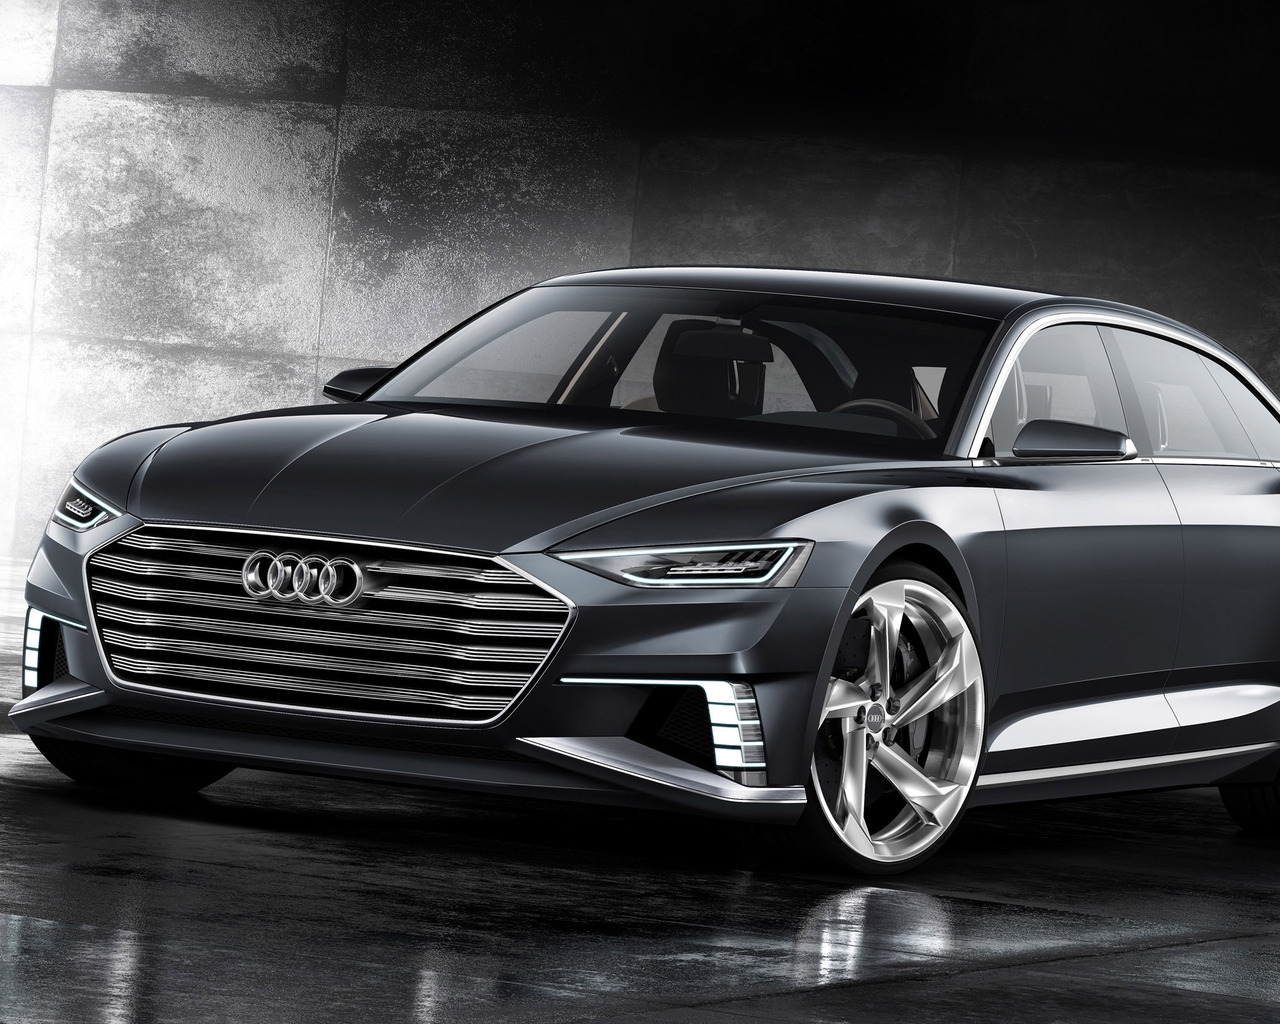 2015 Audi Prologue Avant Concept for 1280 x 1024 resolution